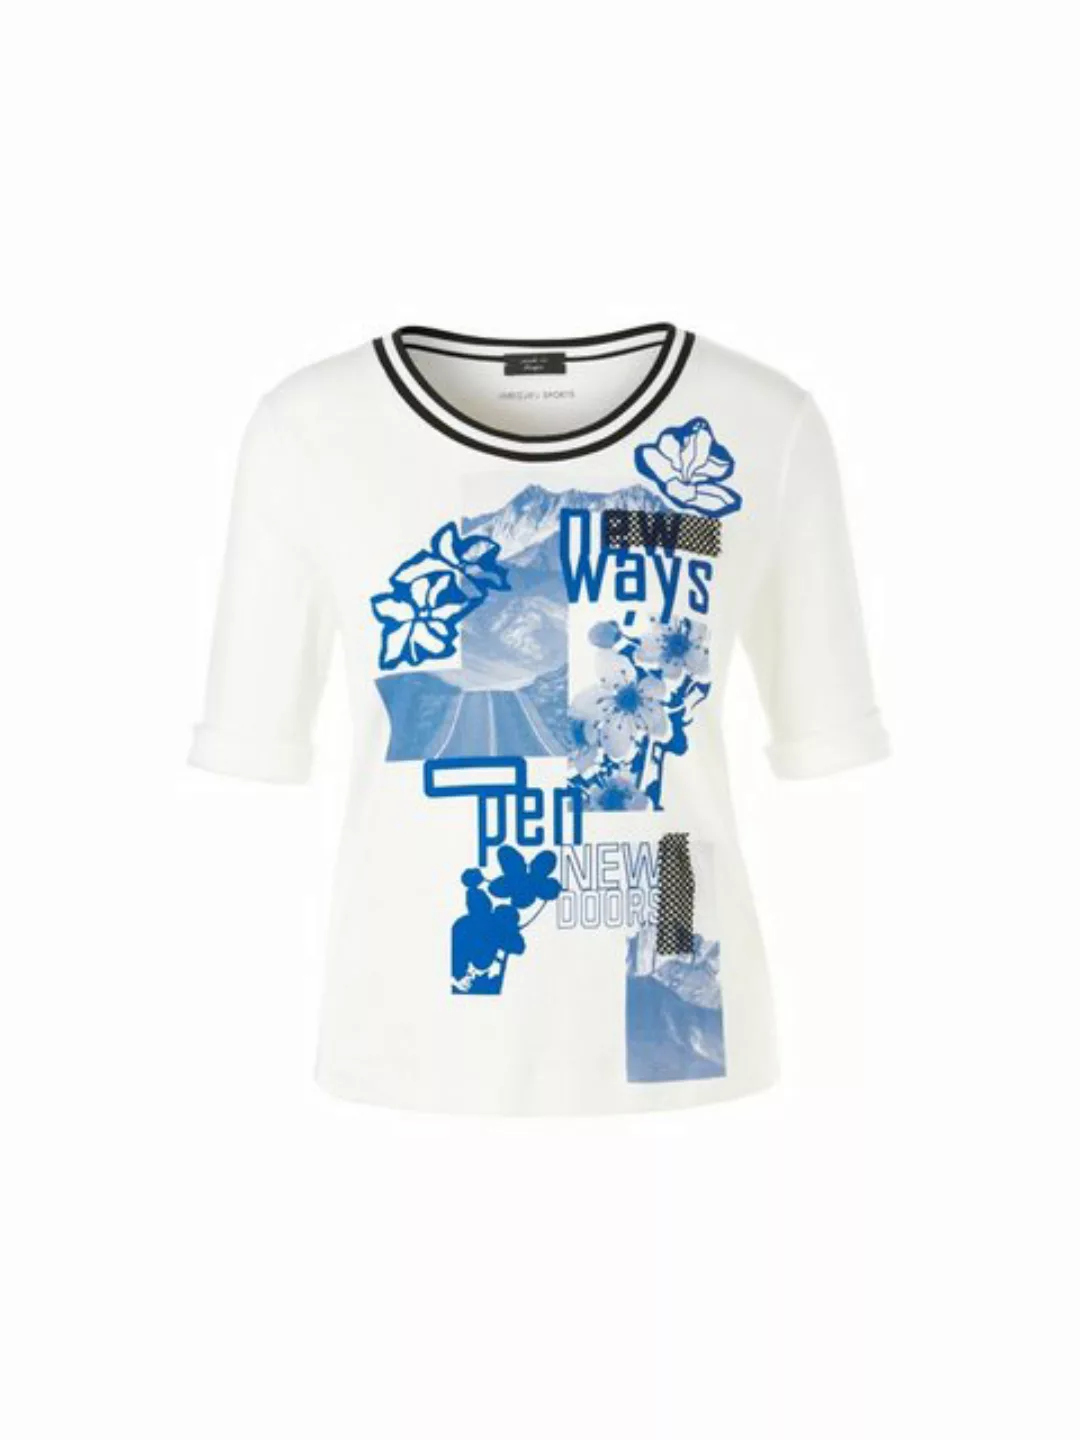 Marc Cain Kurzarmhemd T-Shirt günstig online kaufen